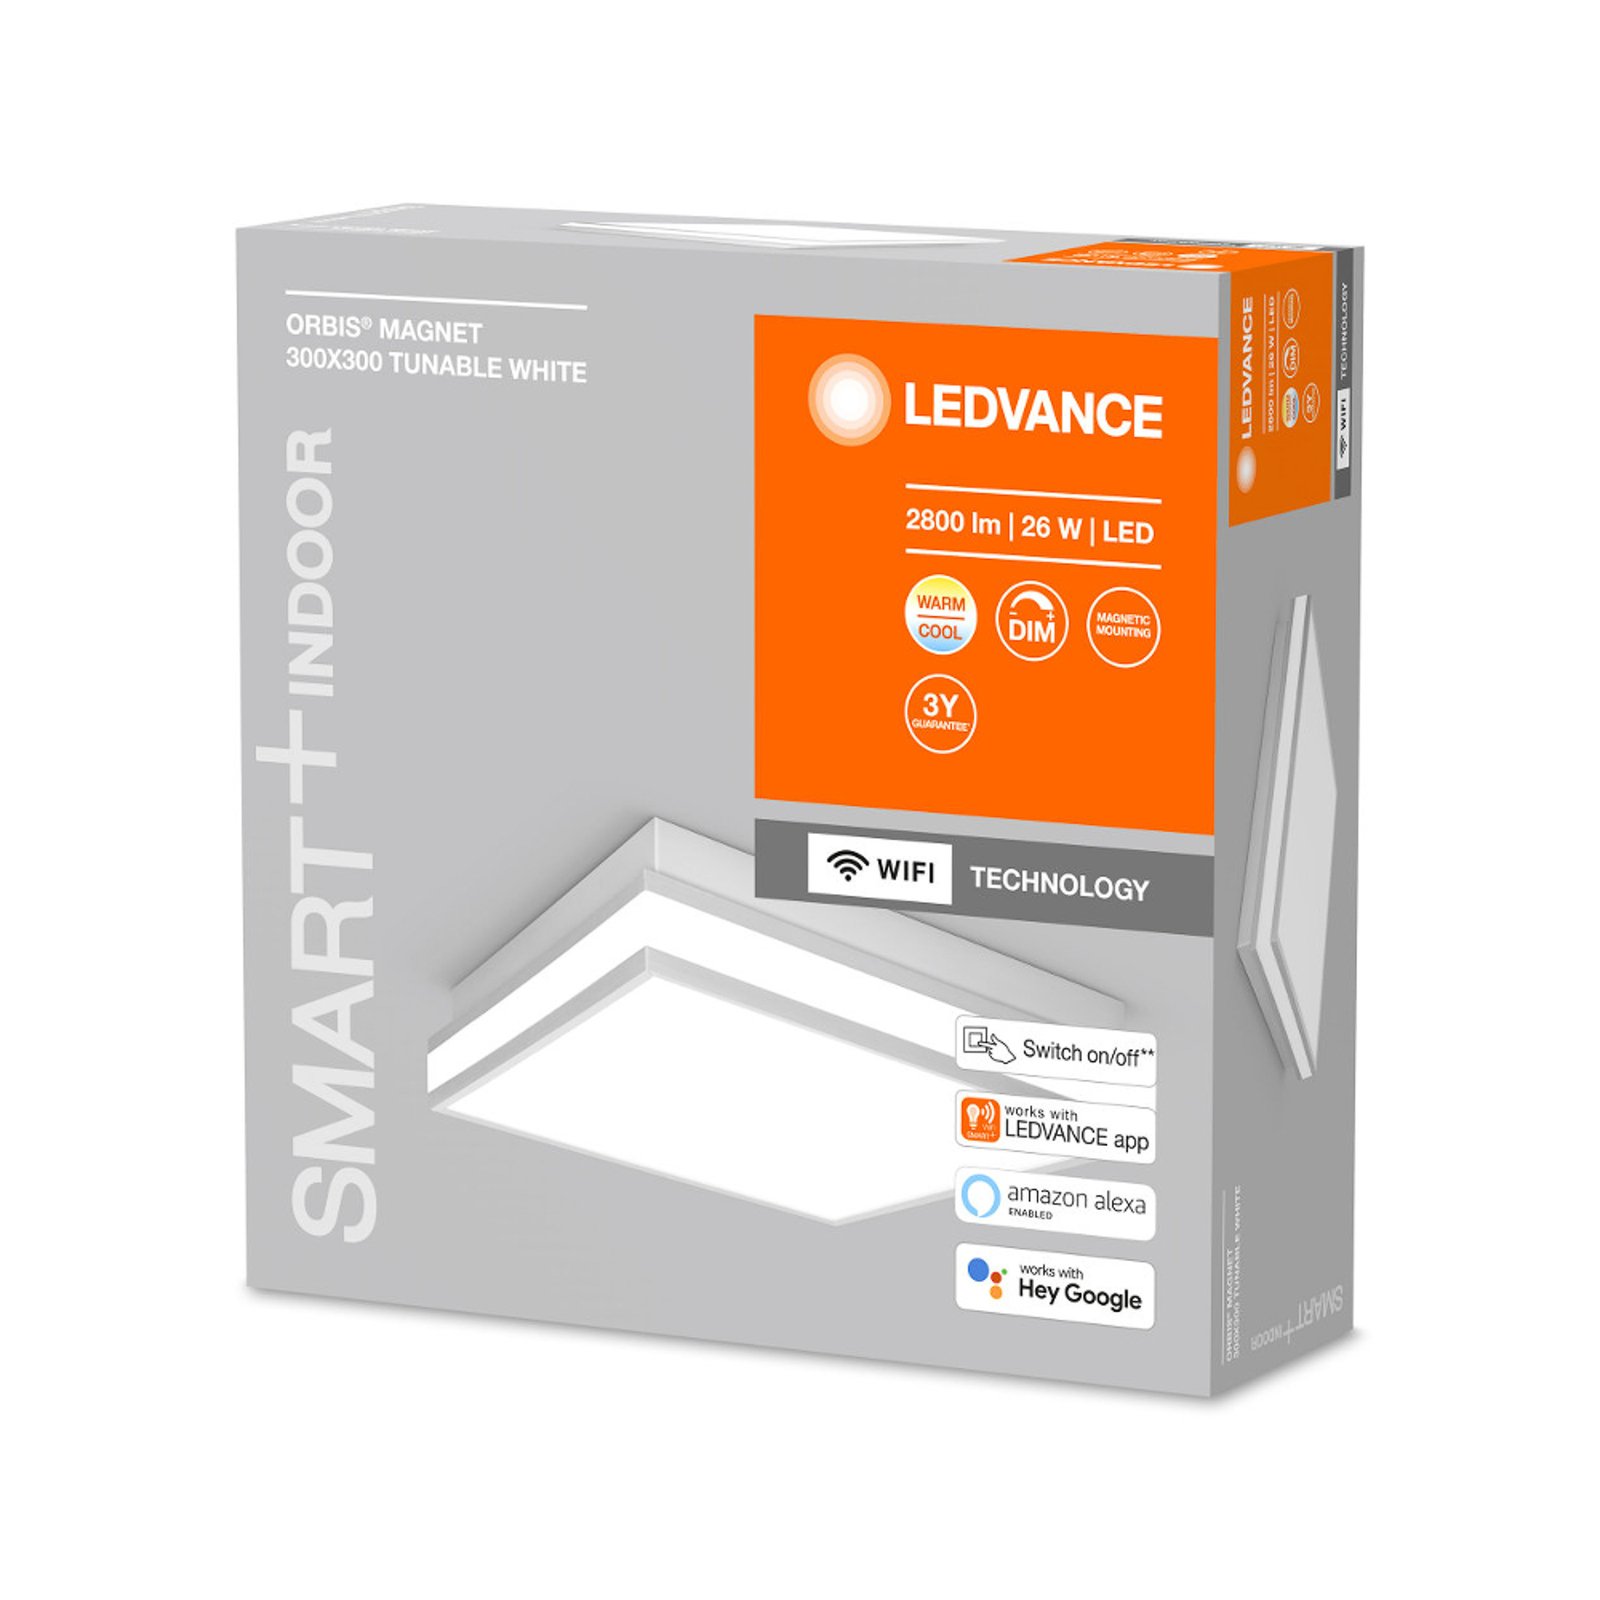 LEDVANCE SMART+ WiFi Orbis Magnet szary, 30x30cm